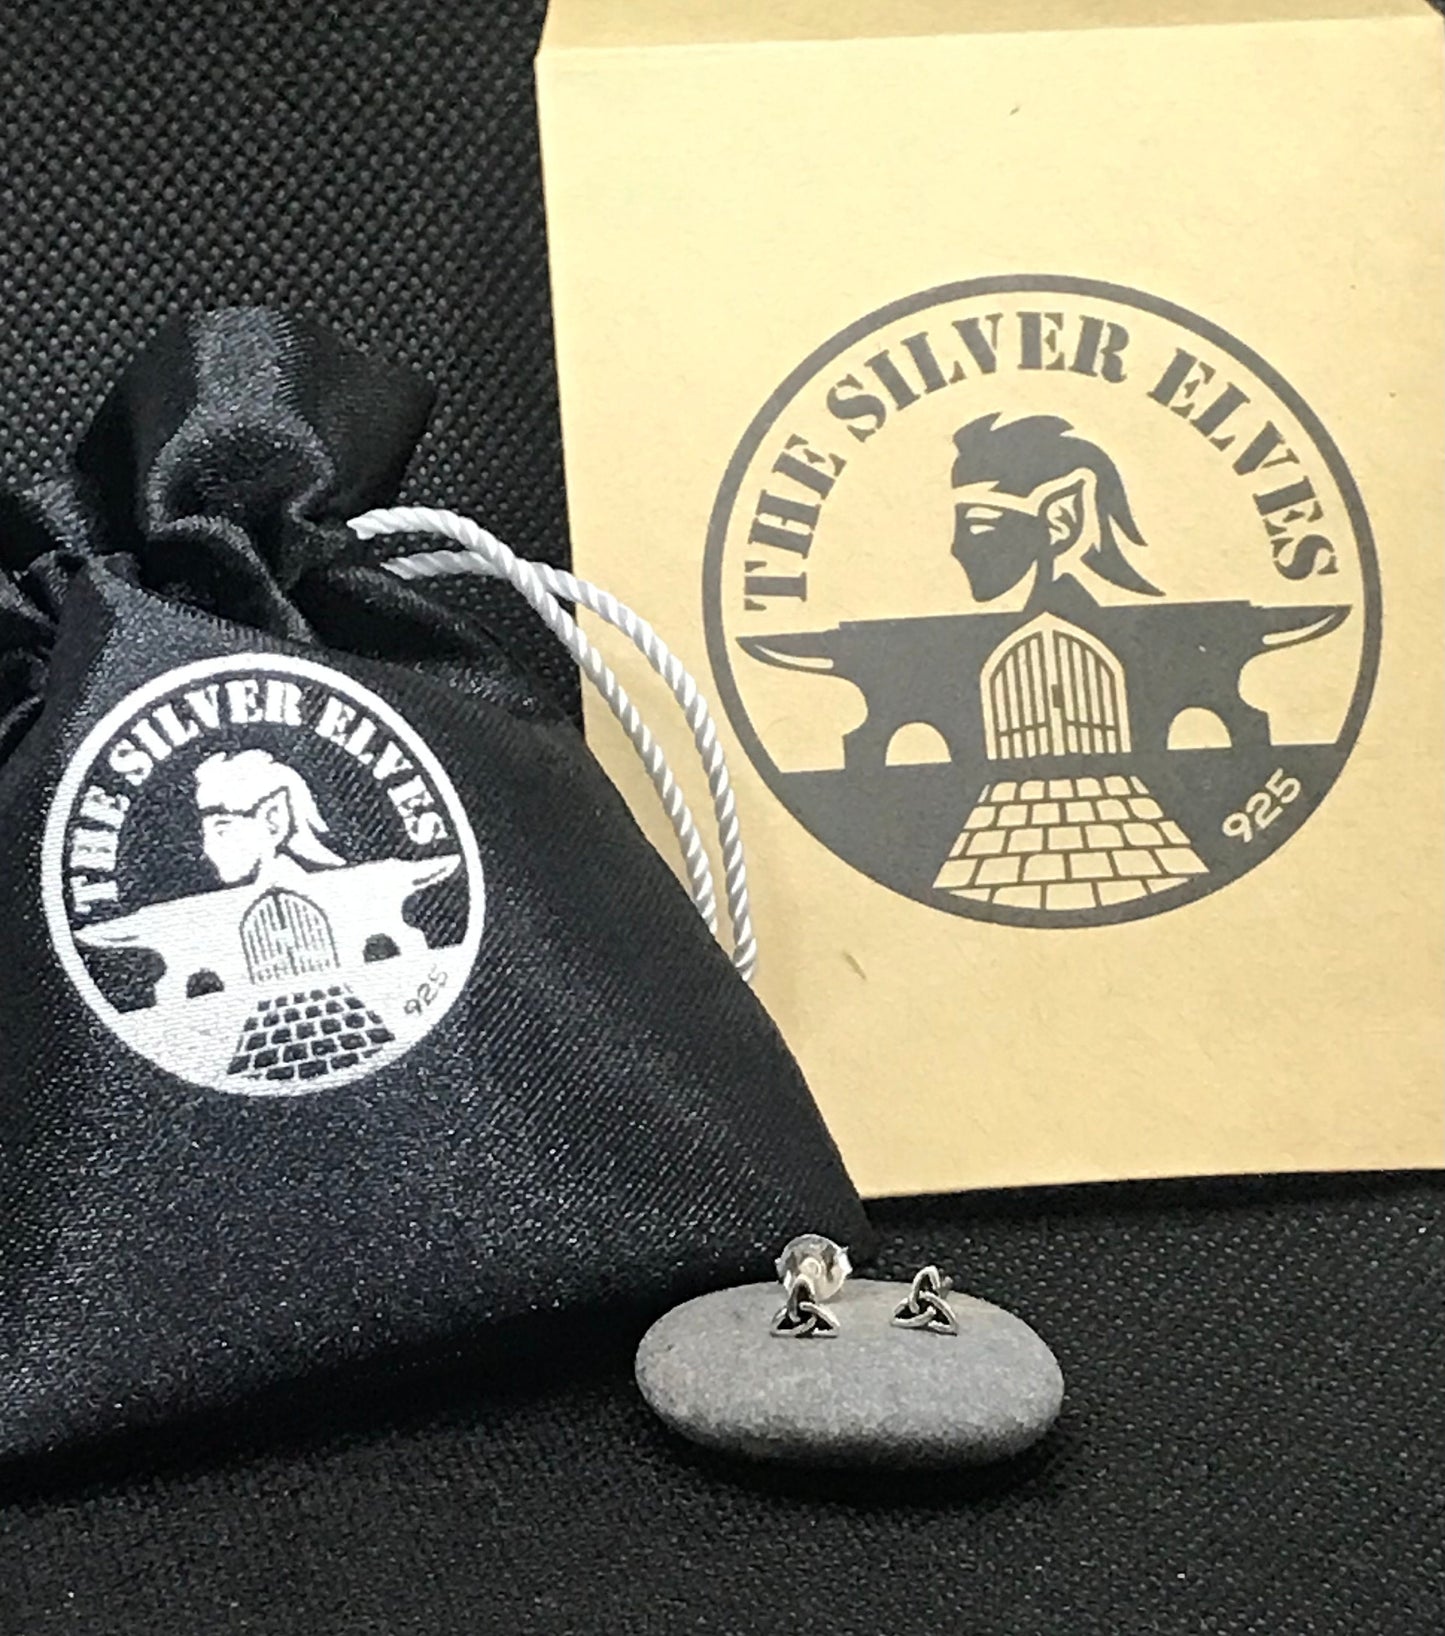 Tiny Celtic triangle earrings Sterling Silver 925 - TSE031